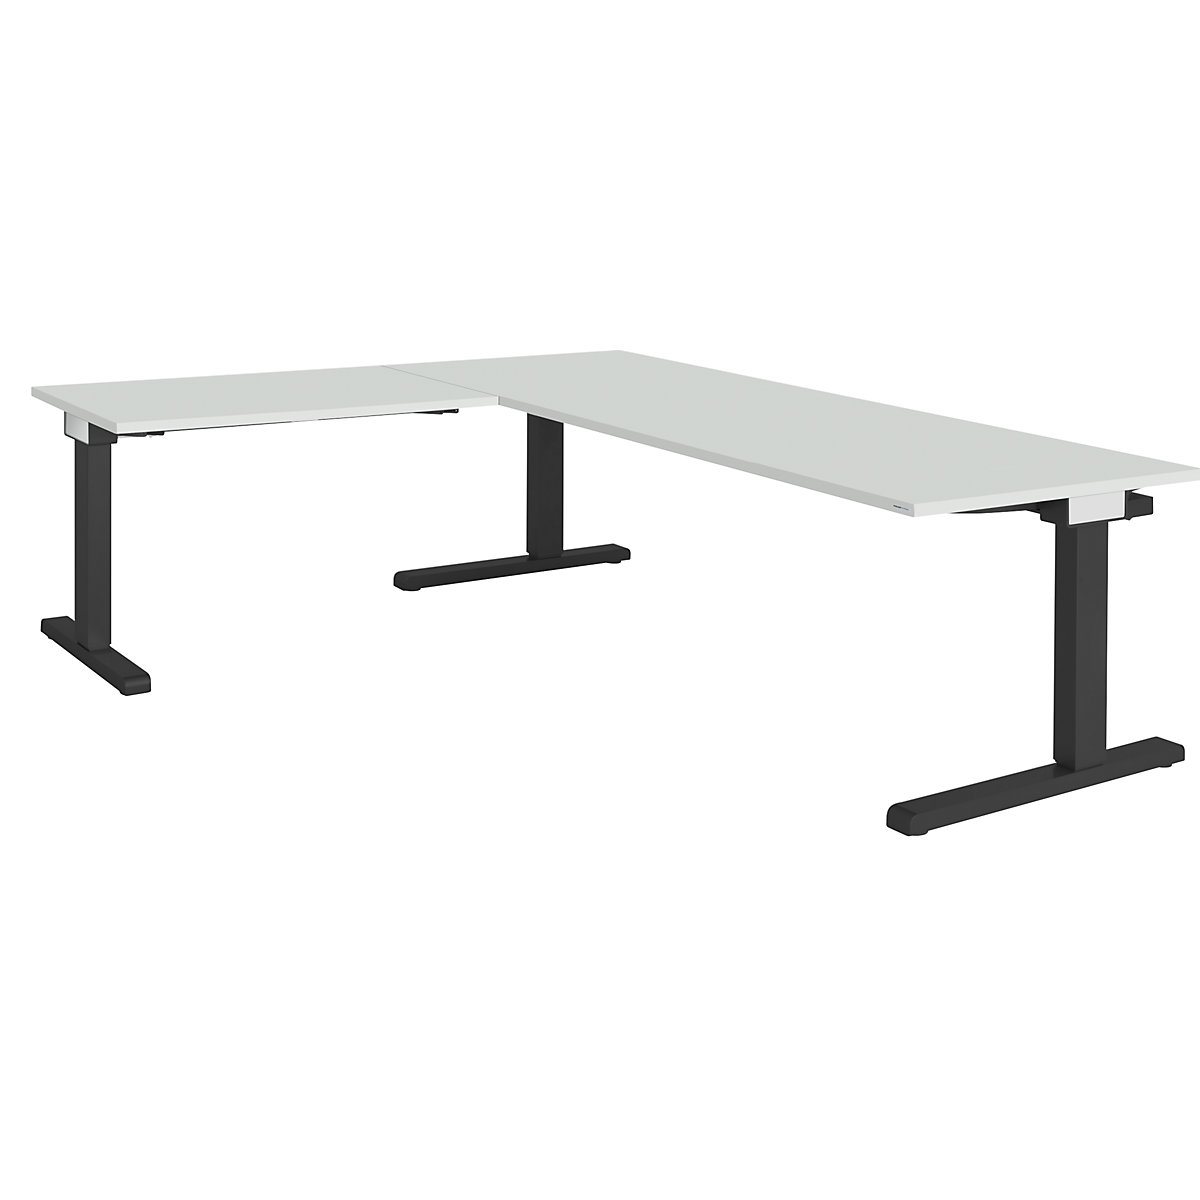 Desk, interlinked – mauser, WxD 2000 x 800 mm, angled extension on left (width 1000 mm), light grey top, charcoal frame-2